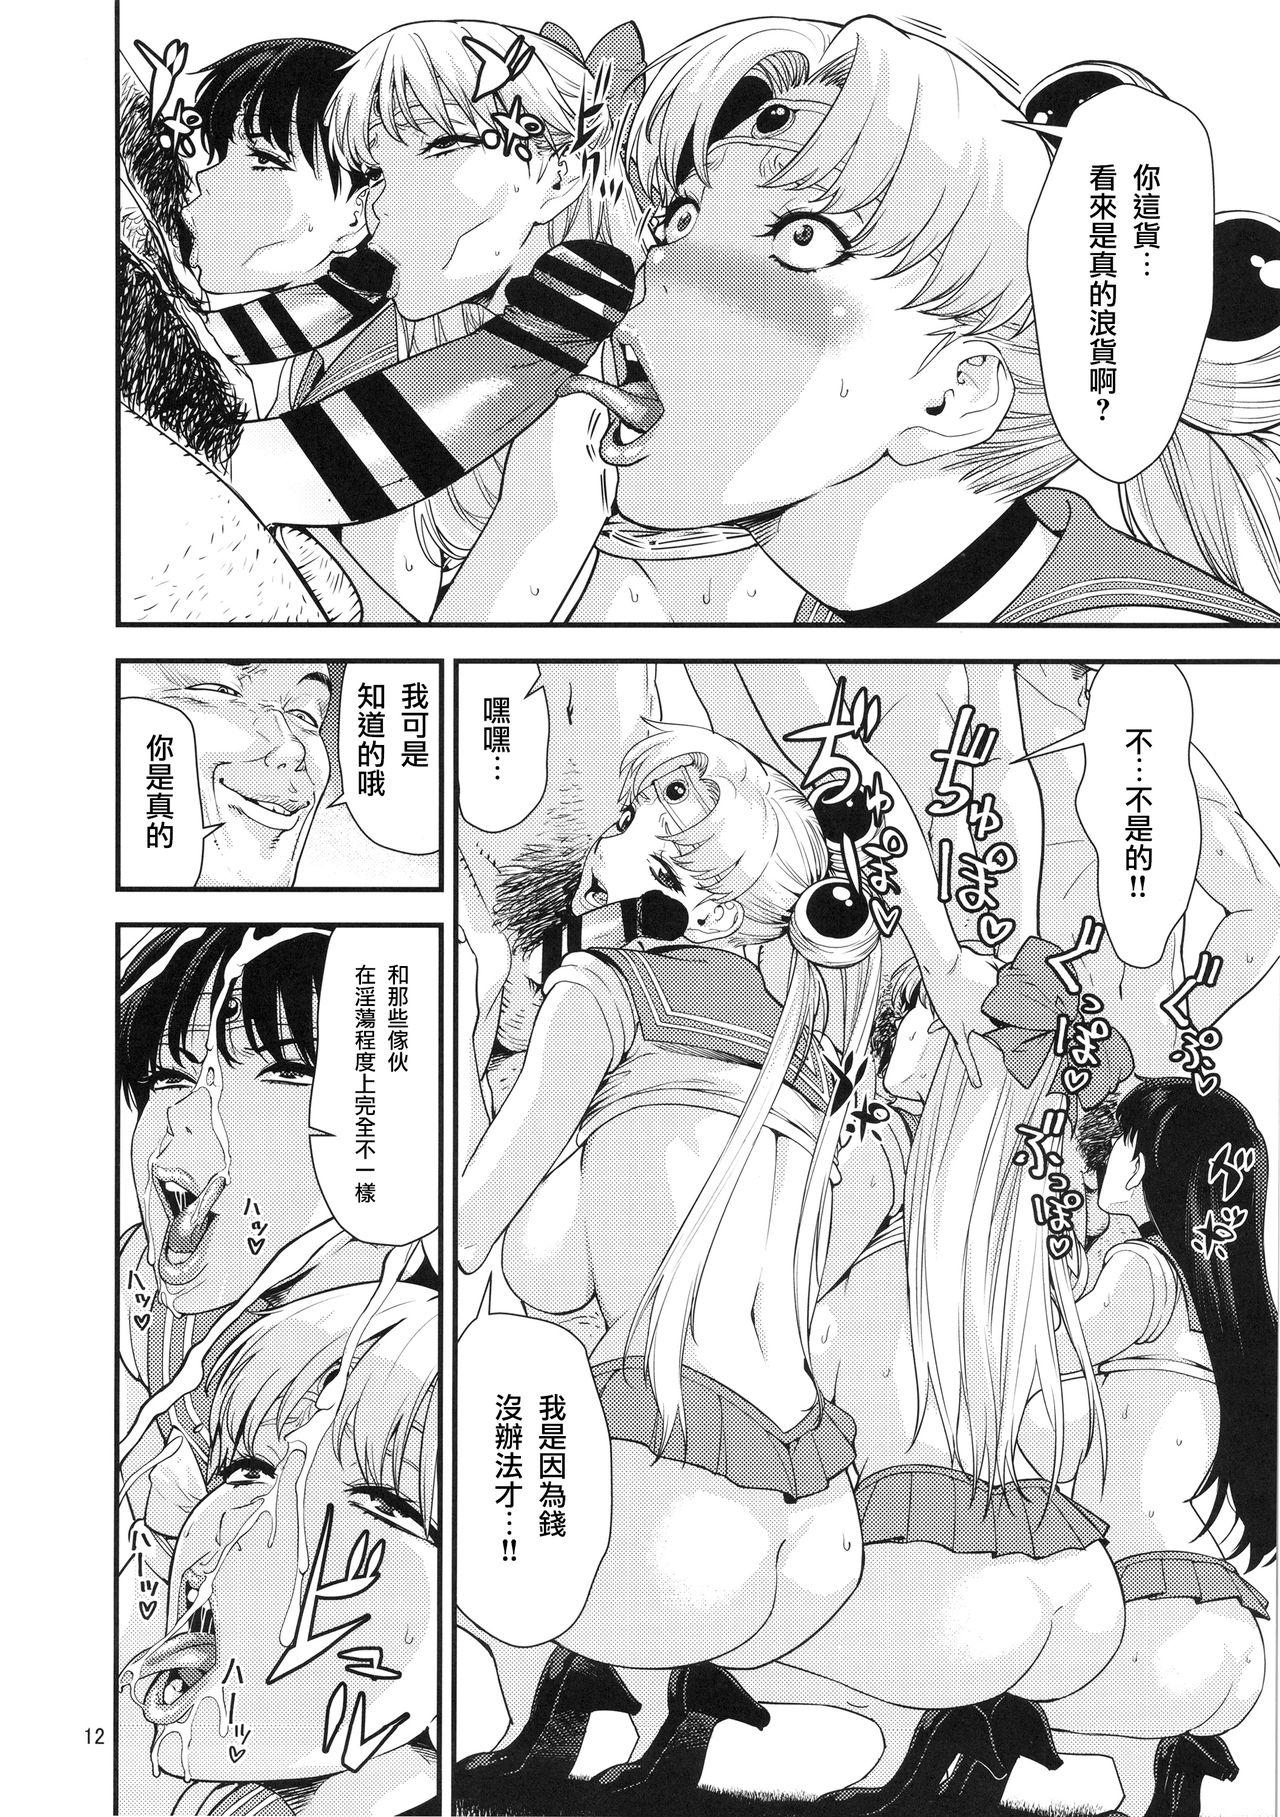 Mas Sailor Moon - Sailor moon Punish - Page 11